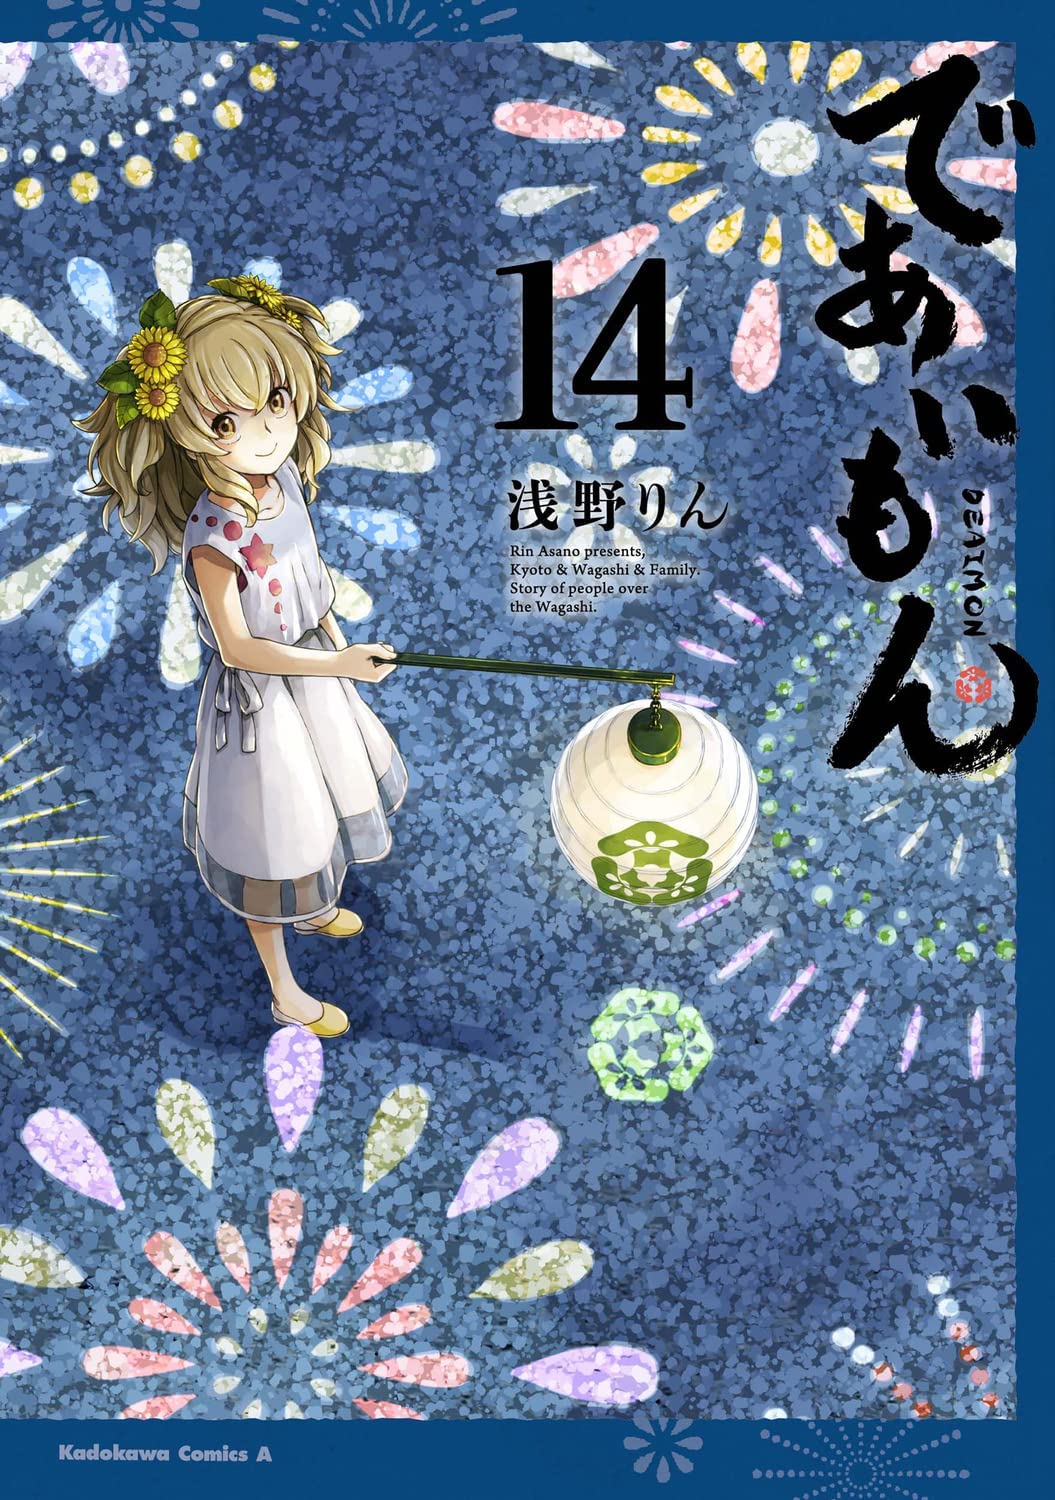 Anime Revealed for Rin Asano's Deaimon Manga